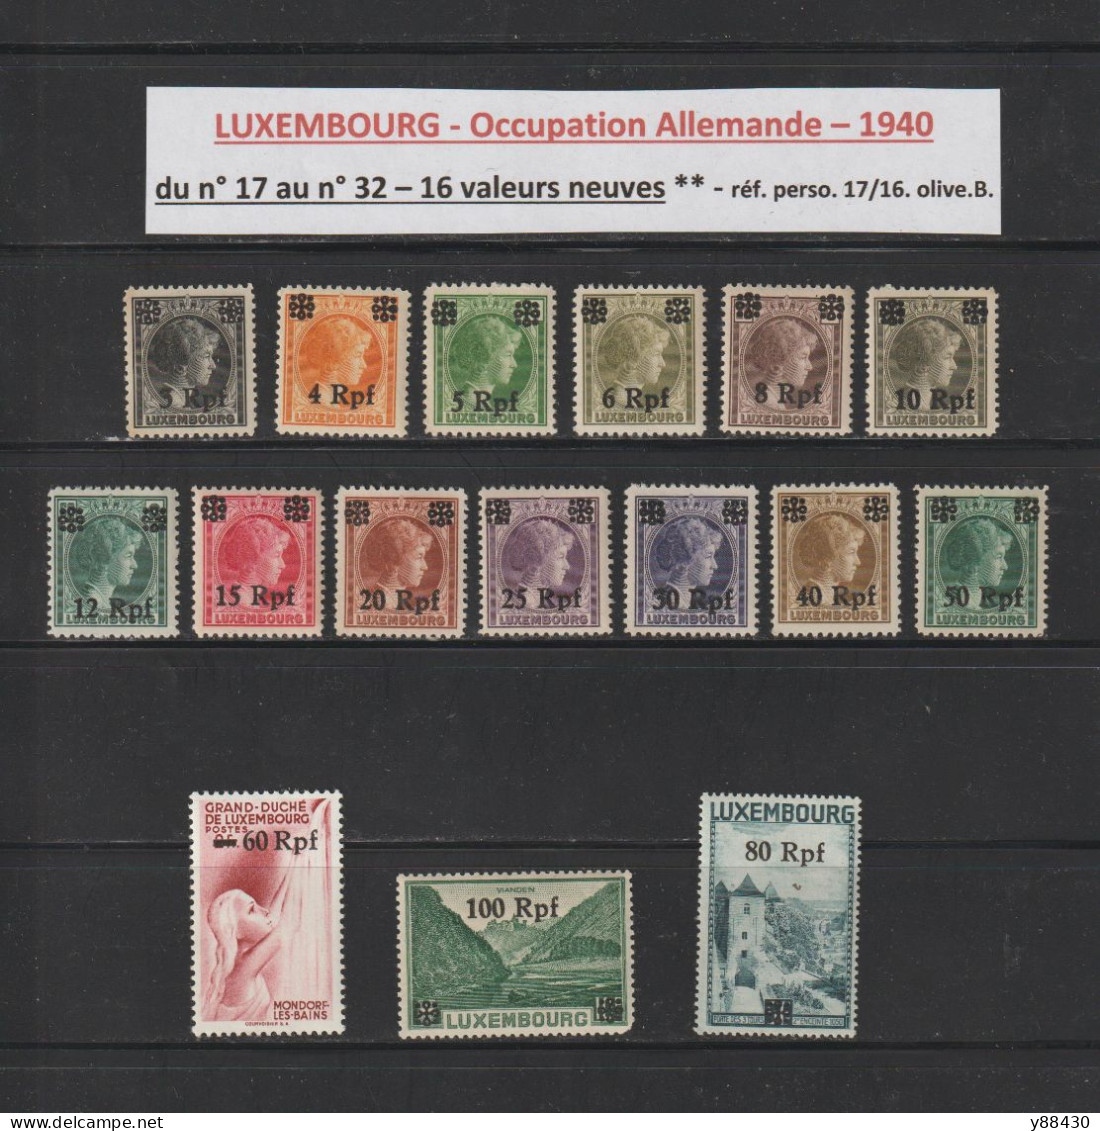 LUXEMBOURG - 17 Au 32 De 1940 - Neuf ** - 16 Valeurs - Surchargé... Rpf  - Occupation Allemande - 2 Scan - 1940-1944 Occupazione Tedesca